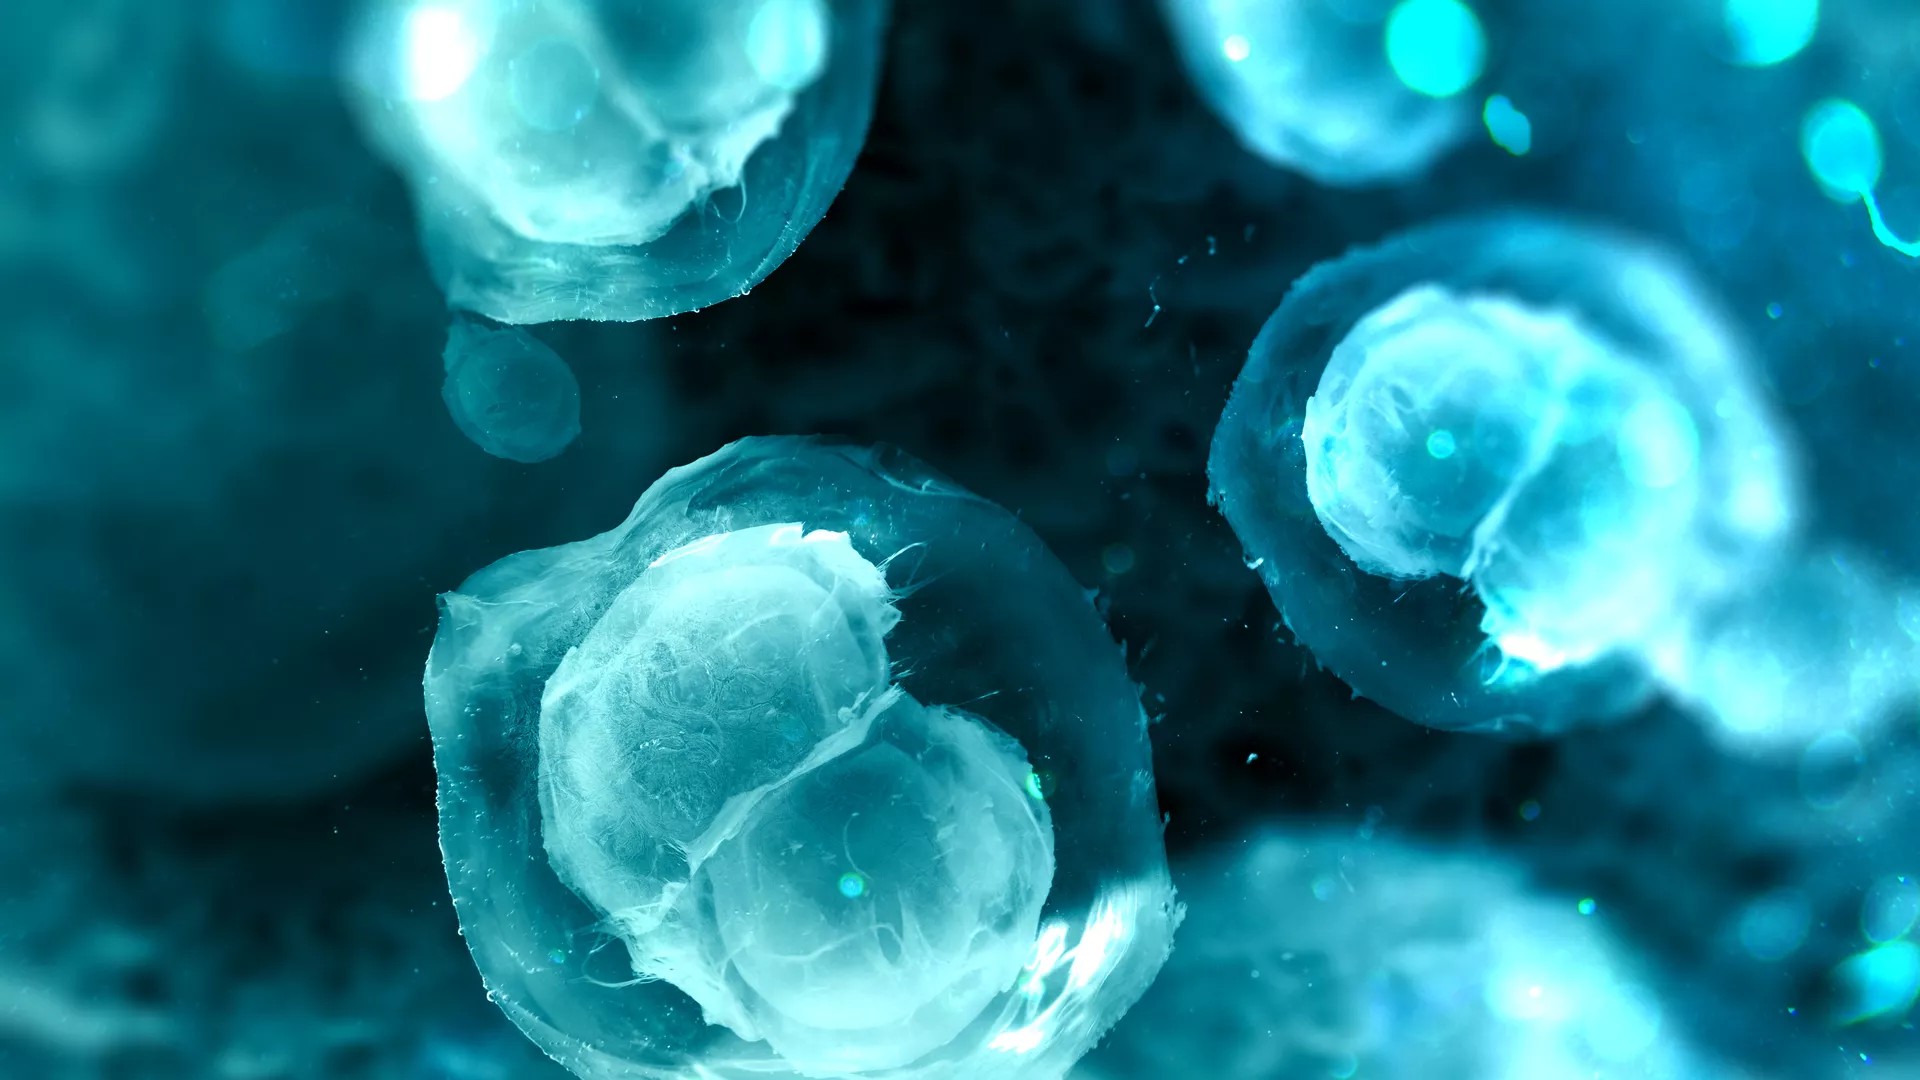 Cover image for "Functional Heterogeneity of Stem Cells"